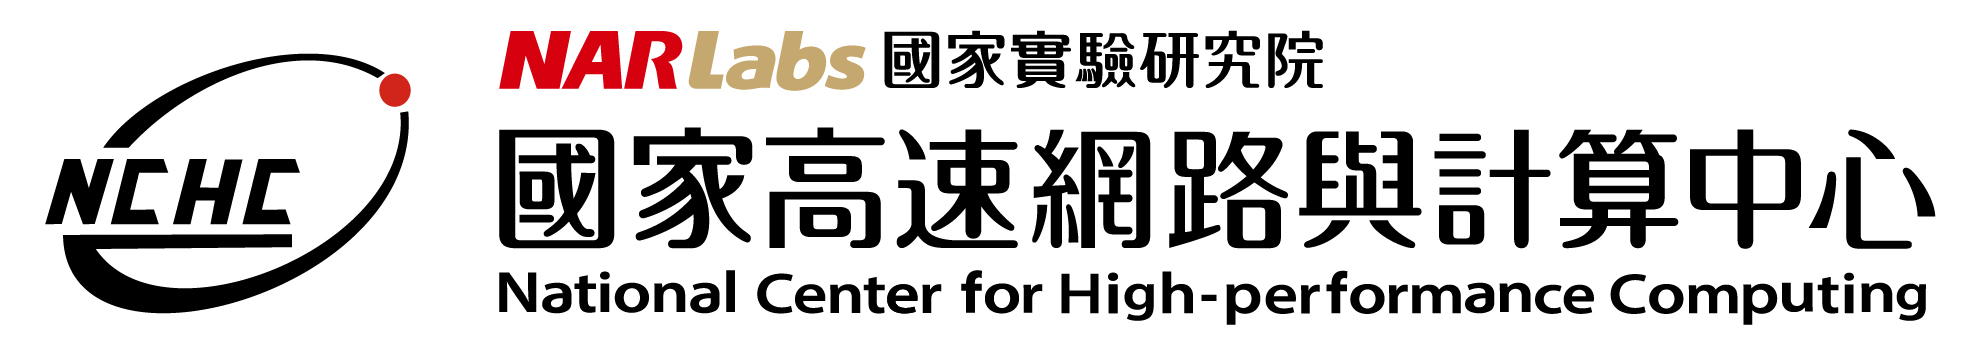 National Center for High-Performance Computing logo